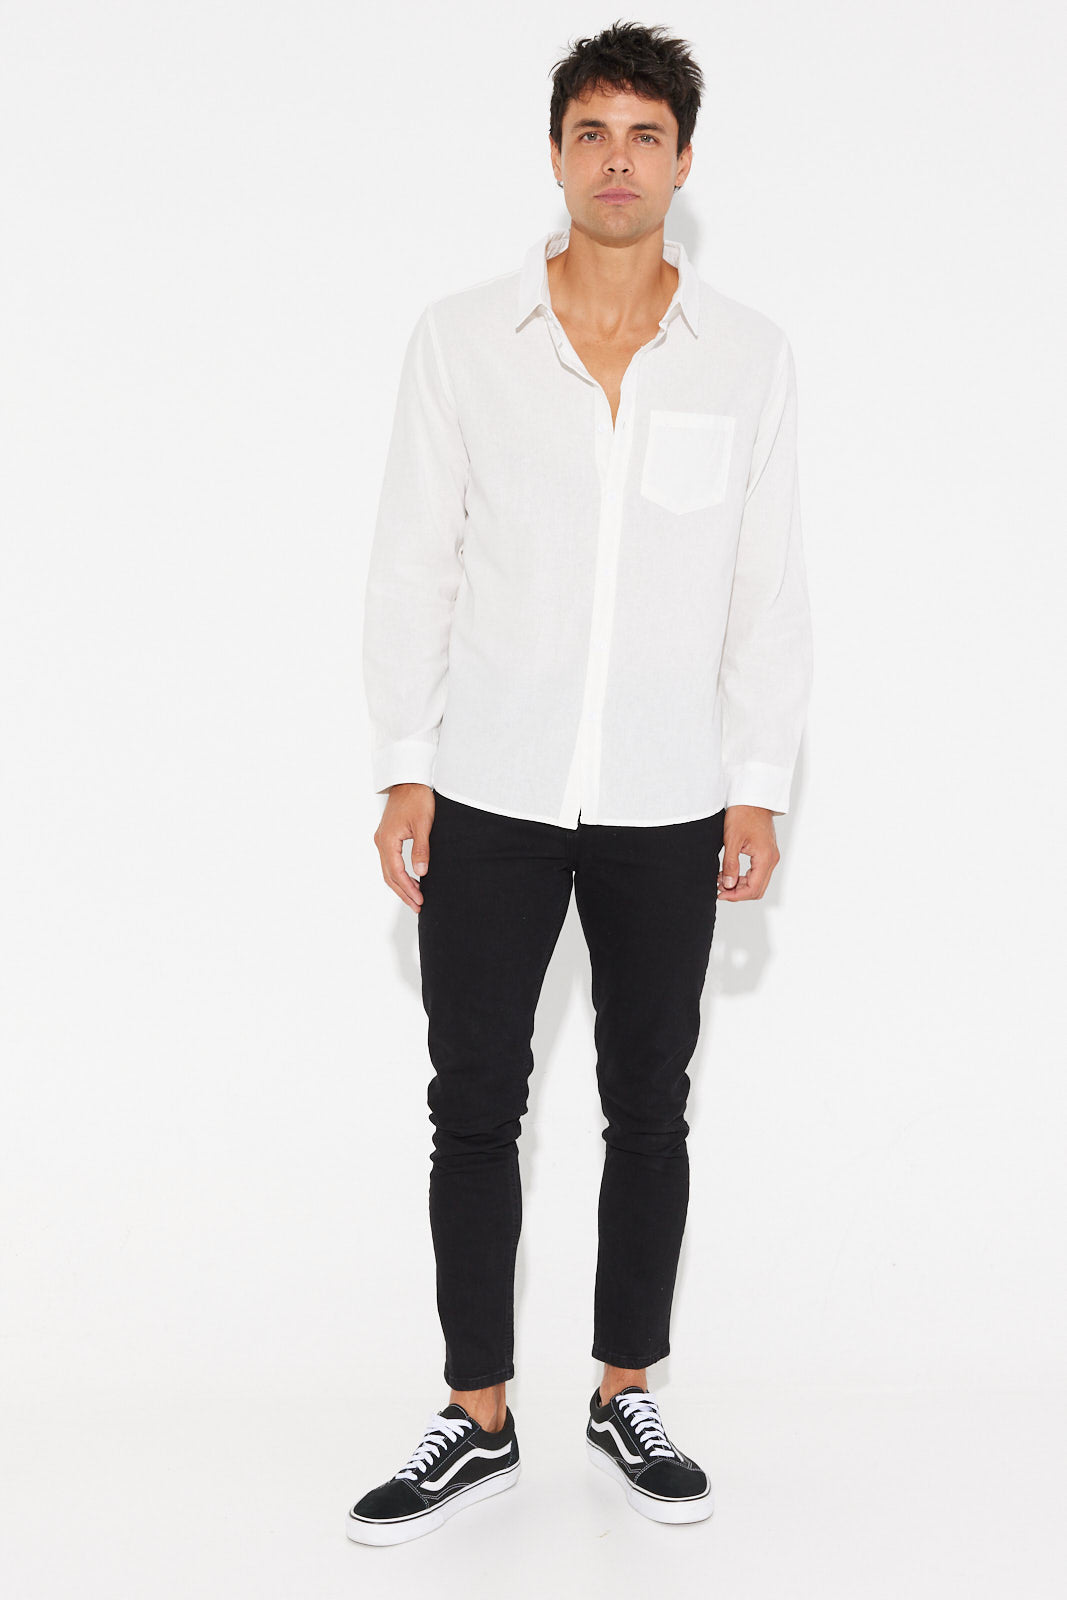 Paxton Linen Shirt White - SALE